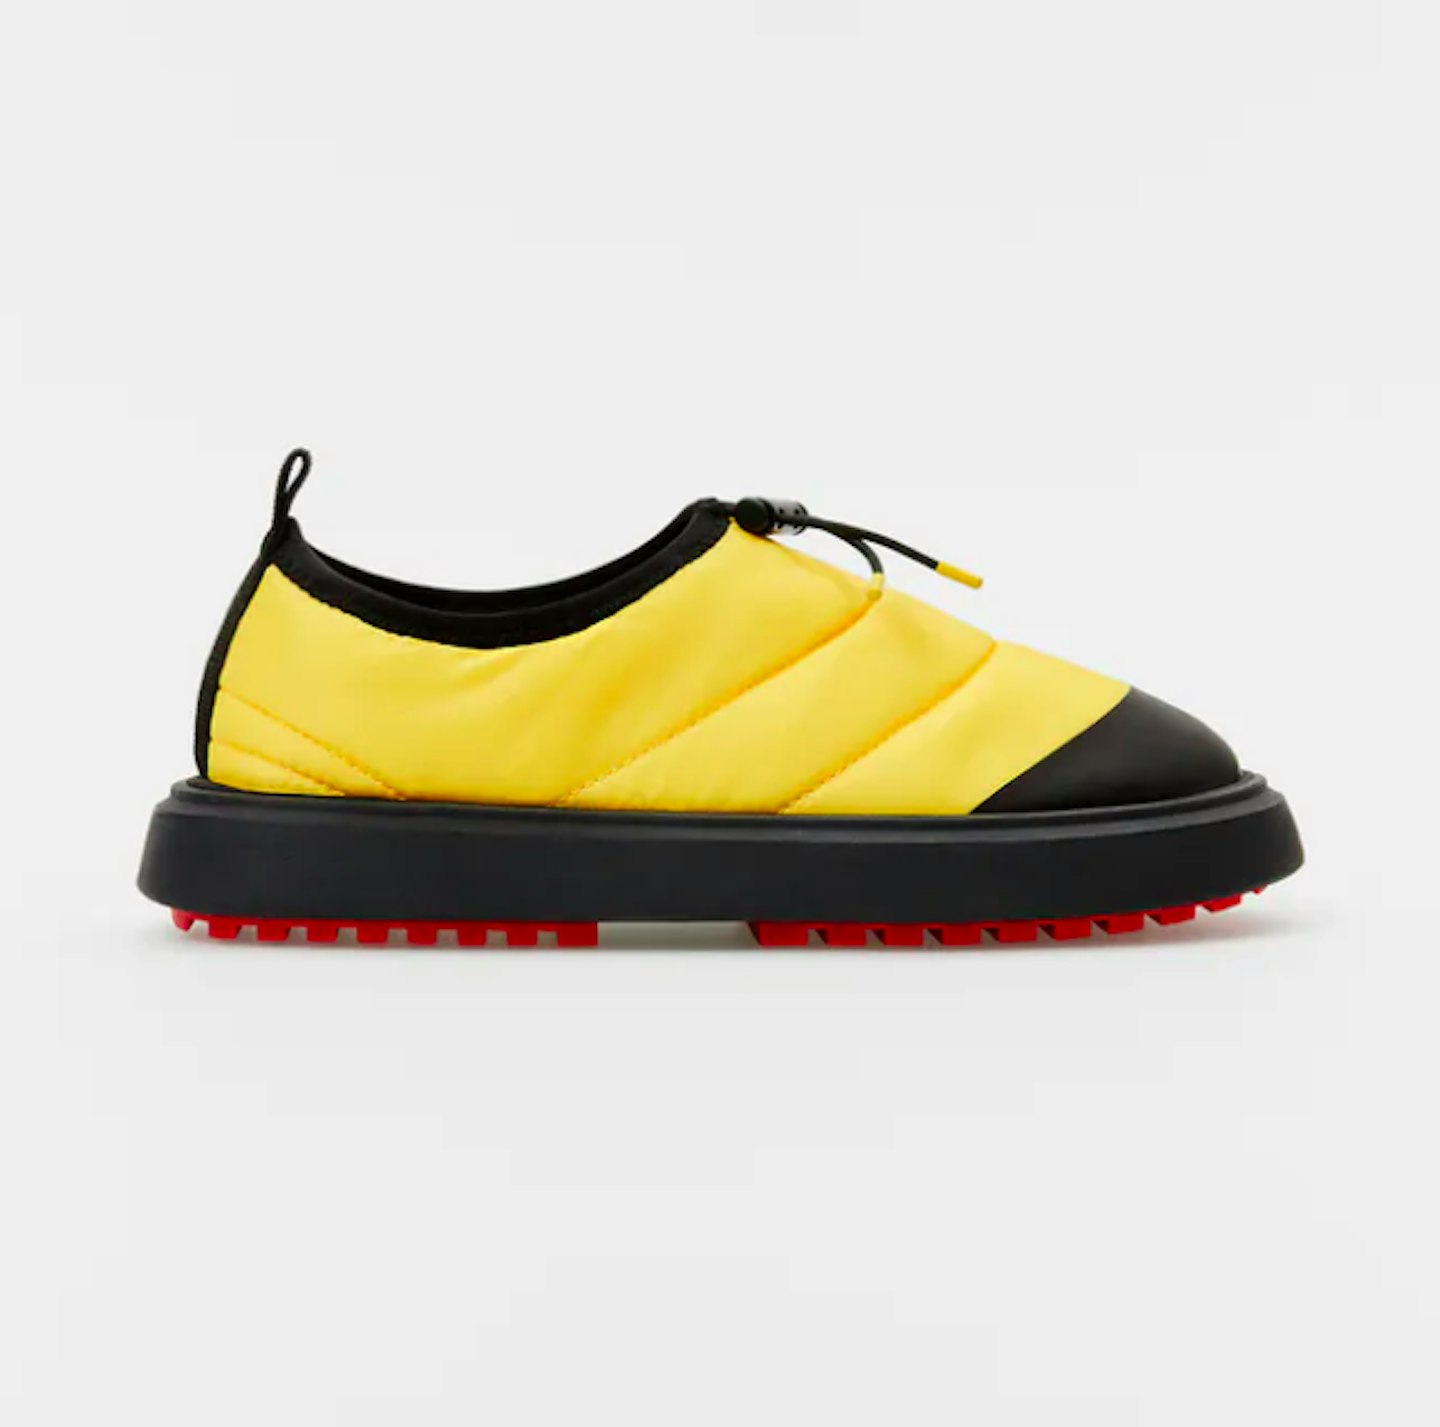 Zara, Alastair McKimm Sneakers Limited Edition, £29.99